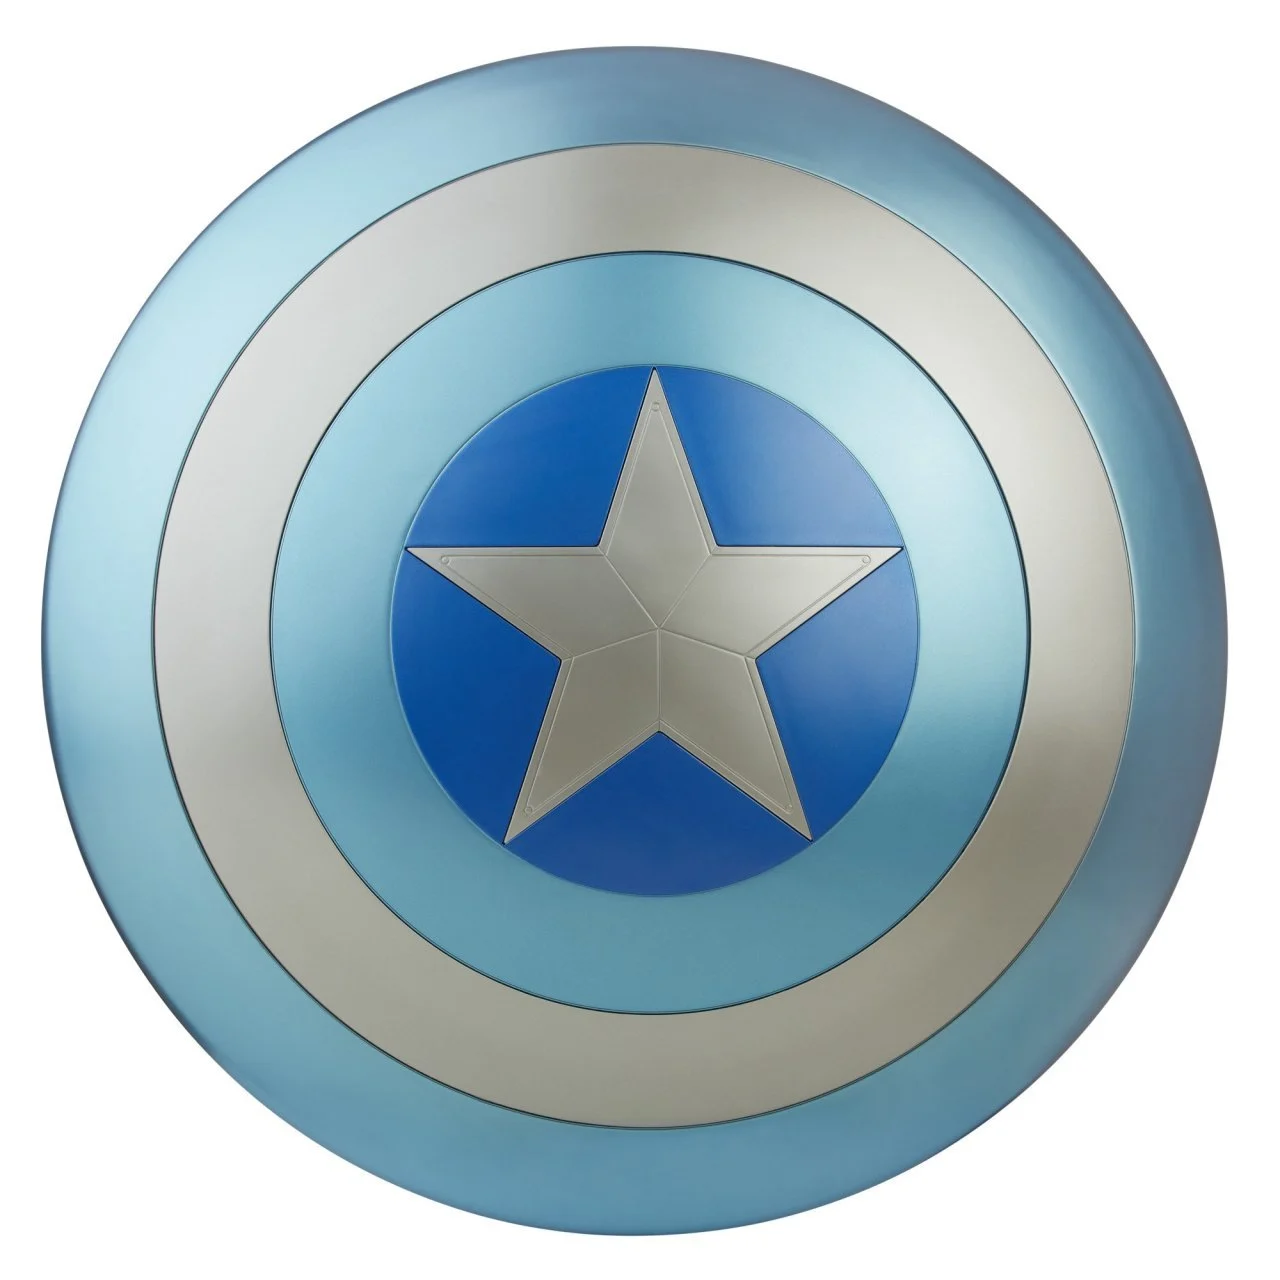 Marvel Legends Captain America The Winter Soldier Shield Replica - Thumbnail